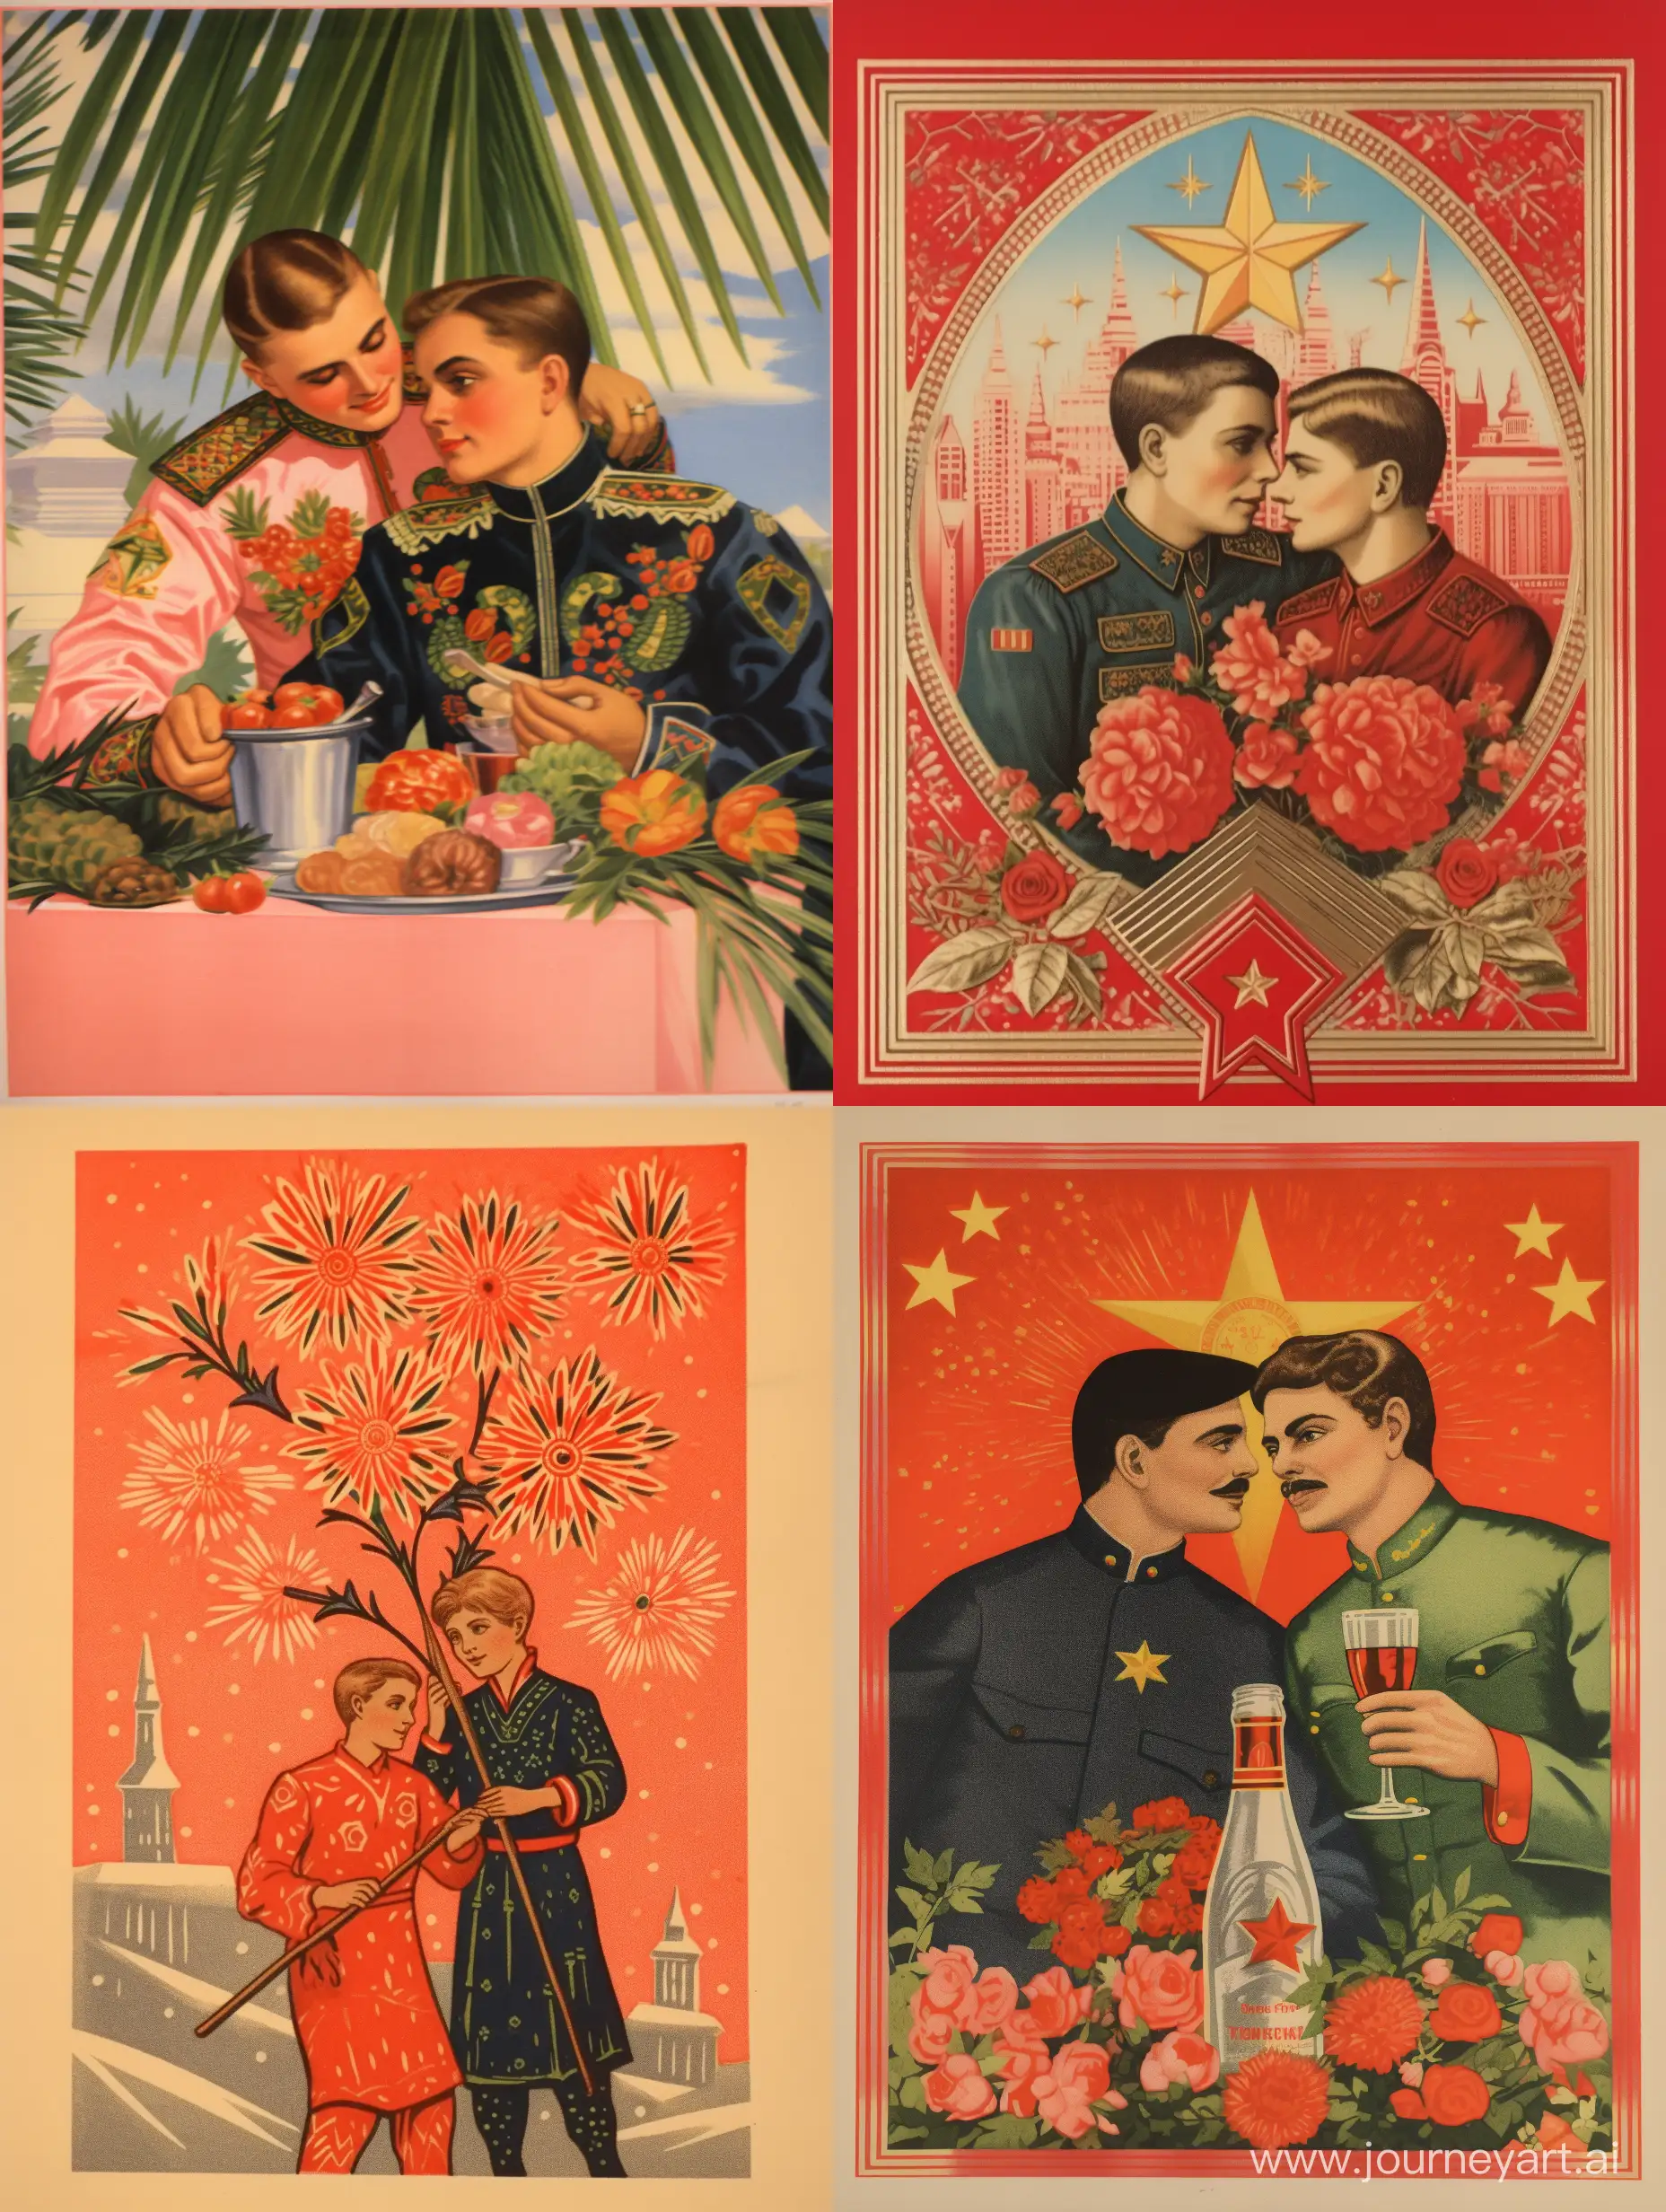 Soviet-New-Year-Card-Featuring-Joyful-Gay-Couple-in-34-Aspect-Ratio